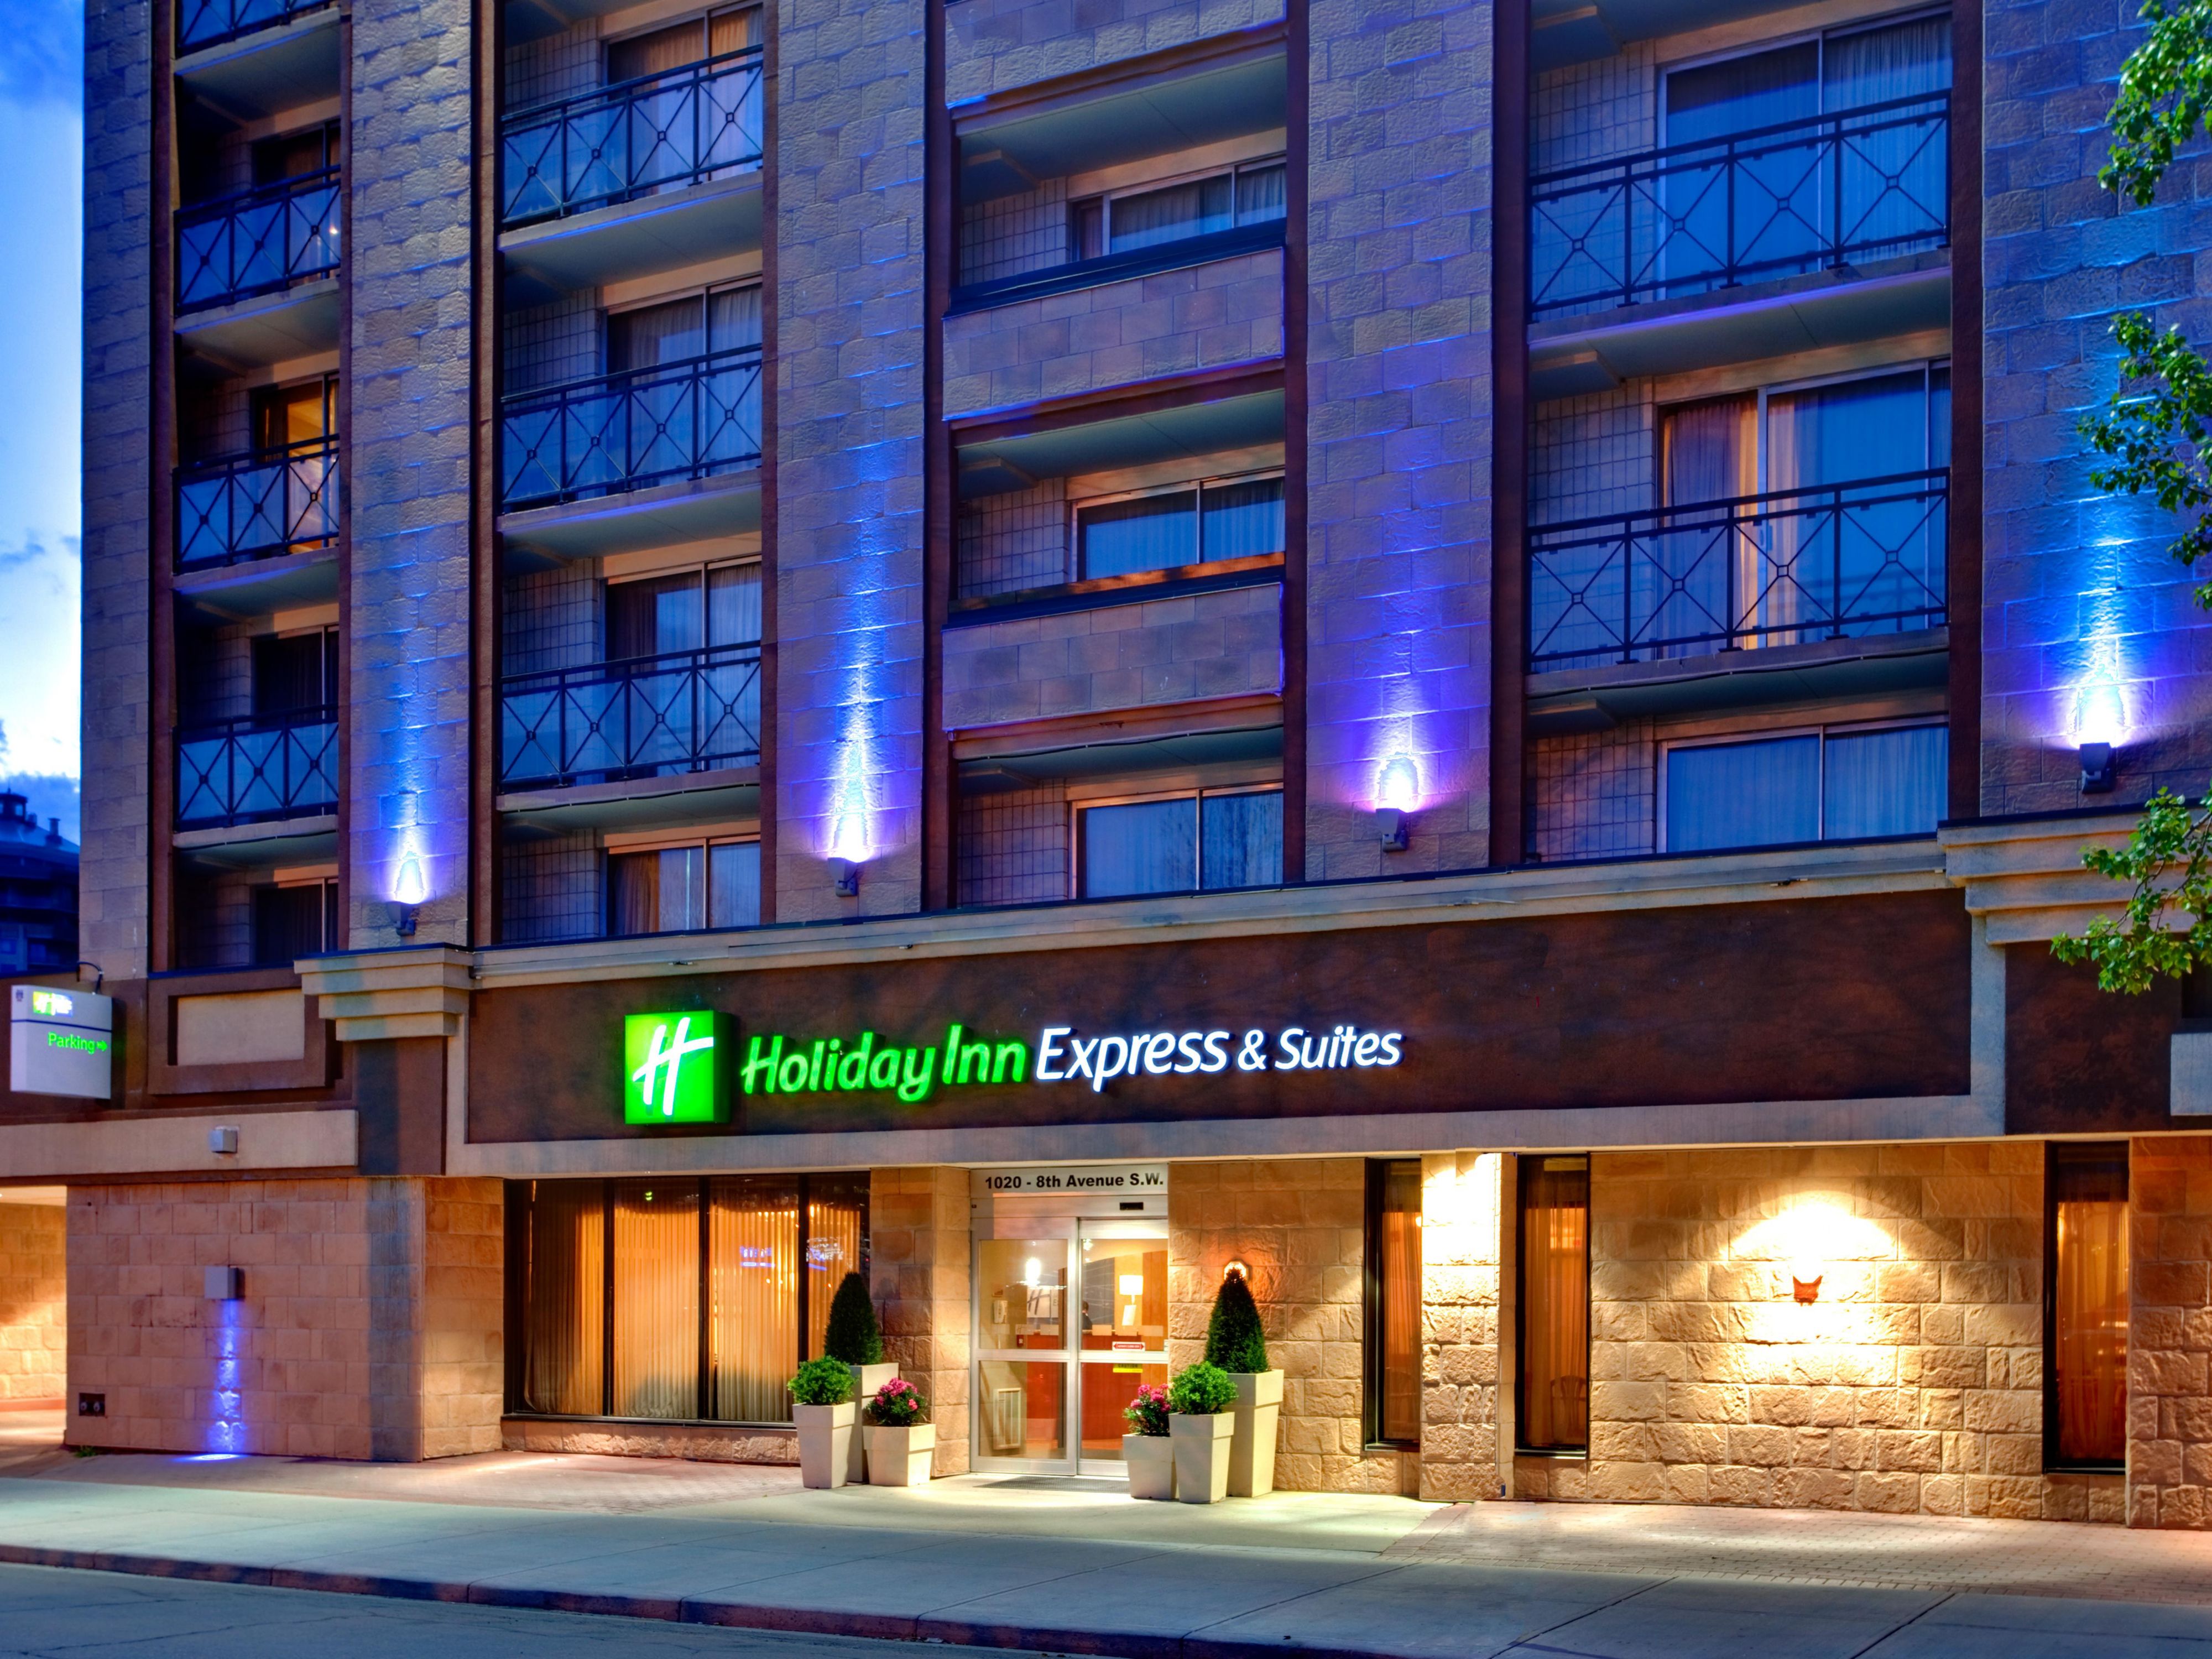 Holiday Inn Express & Suites Calgary Calgary,